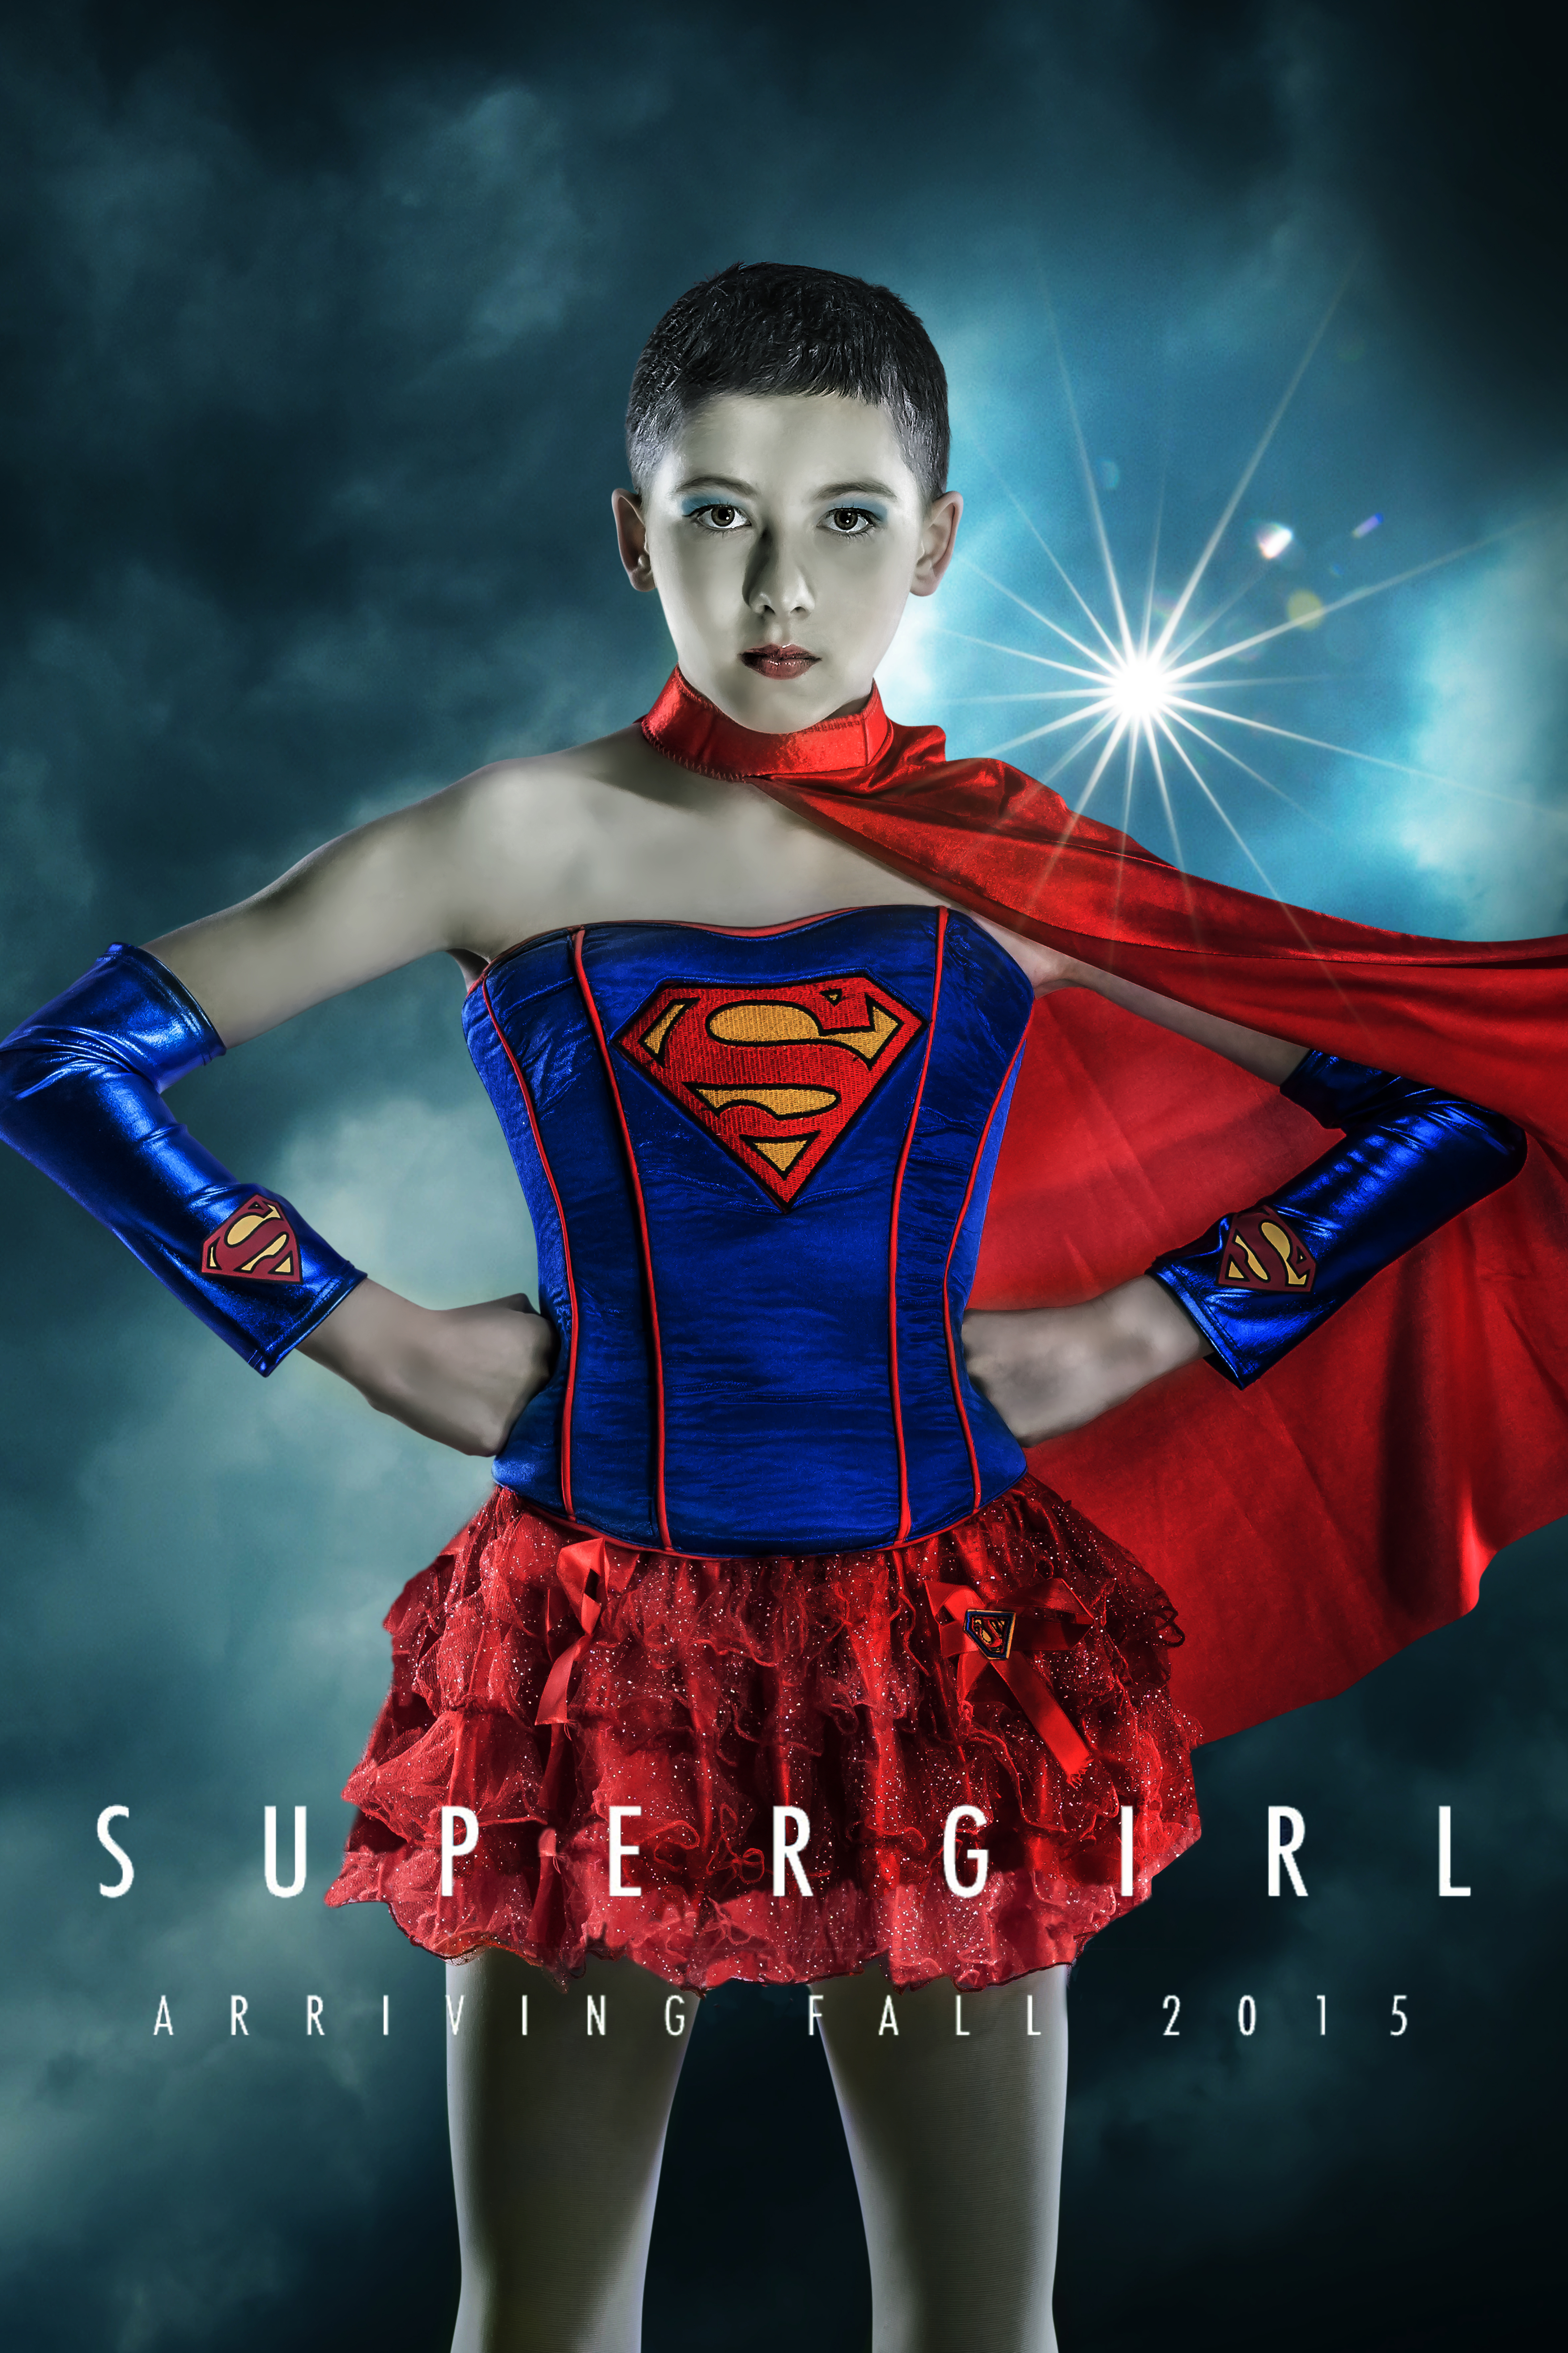 Jill as Supergirl